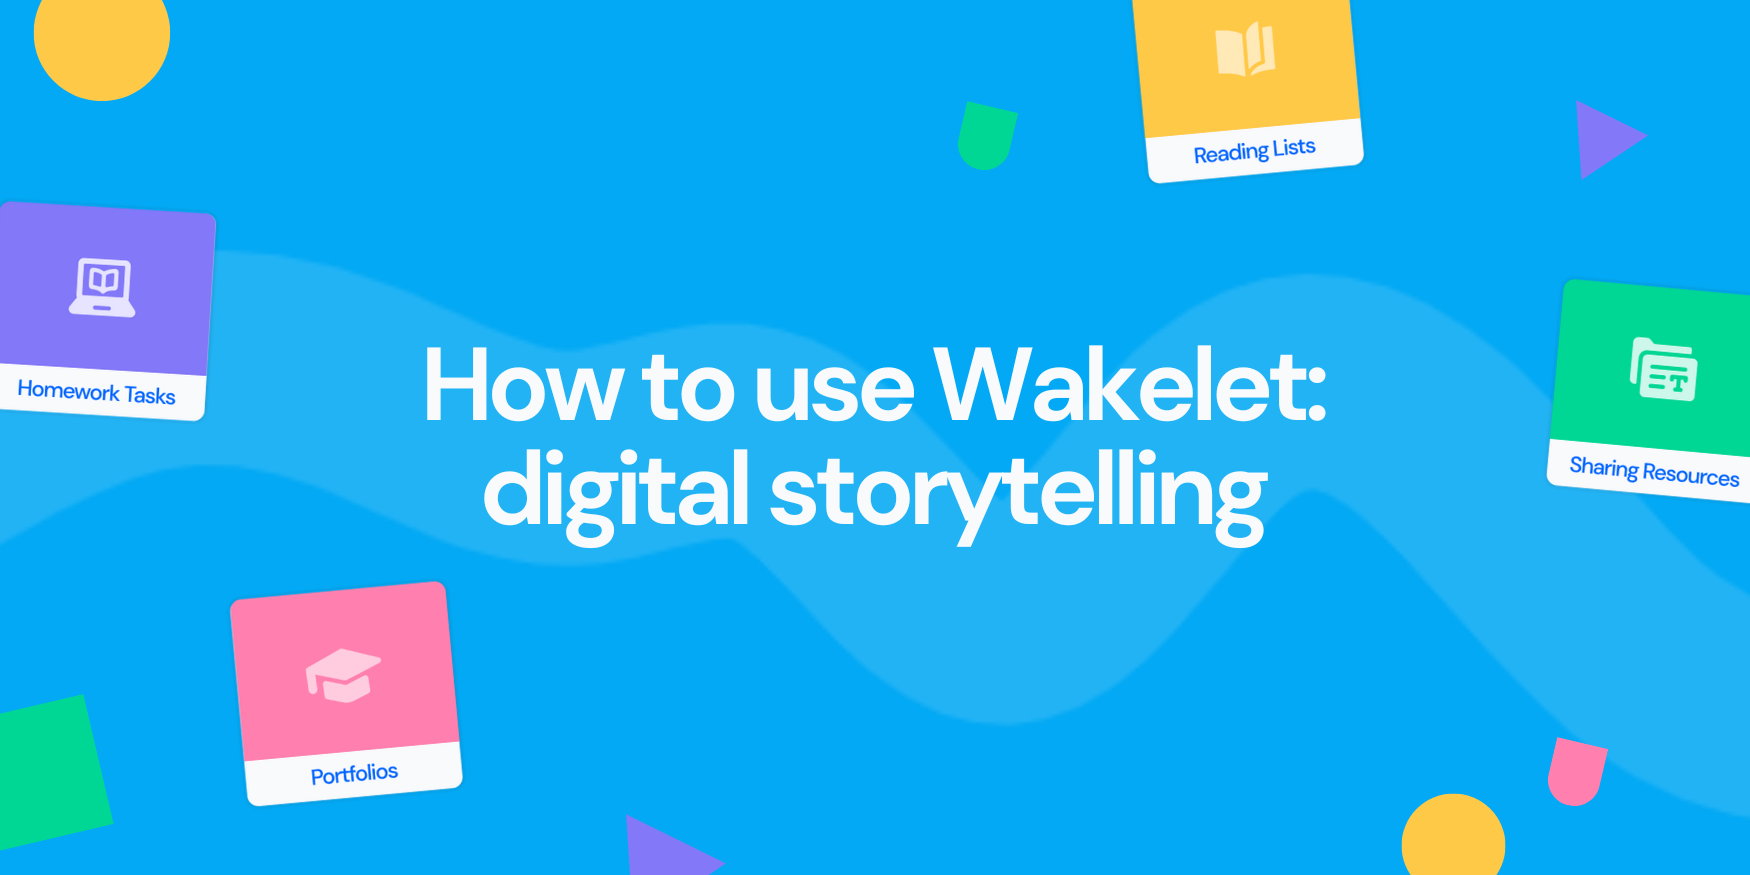 How to use Wakelet: digital storytelling